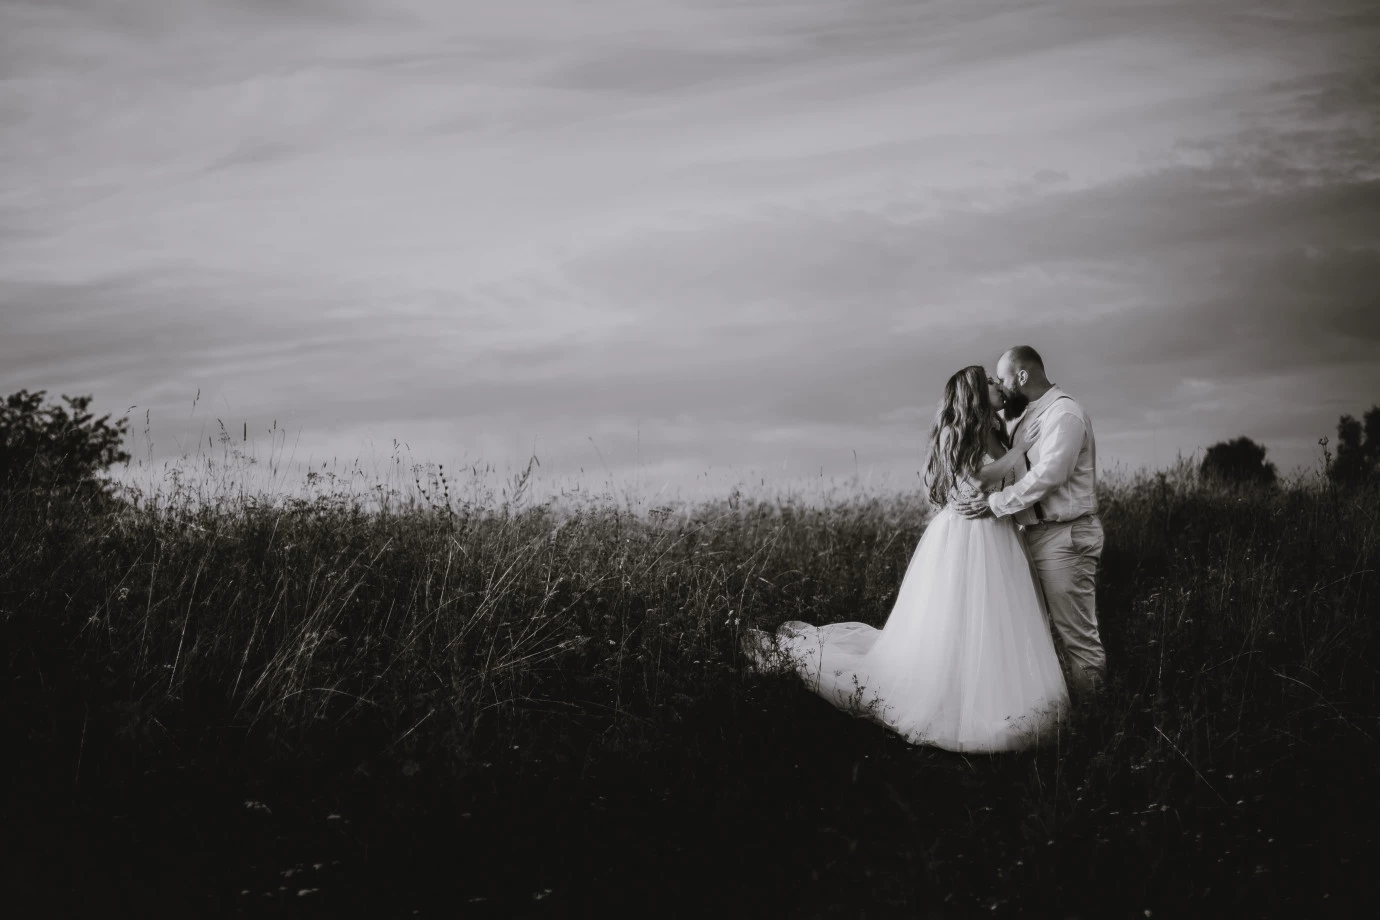 fotograf bydgoszcz nimithril portfolio zdjecia slubne inspiracje wesele plener slubny sesja slubna